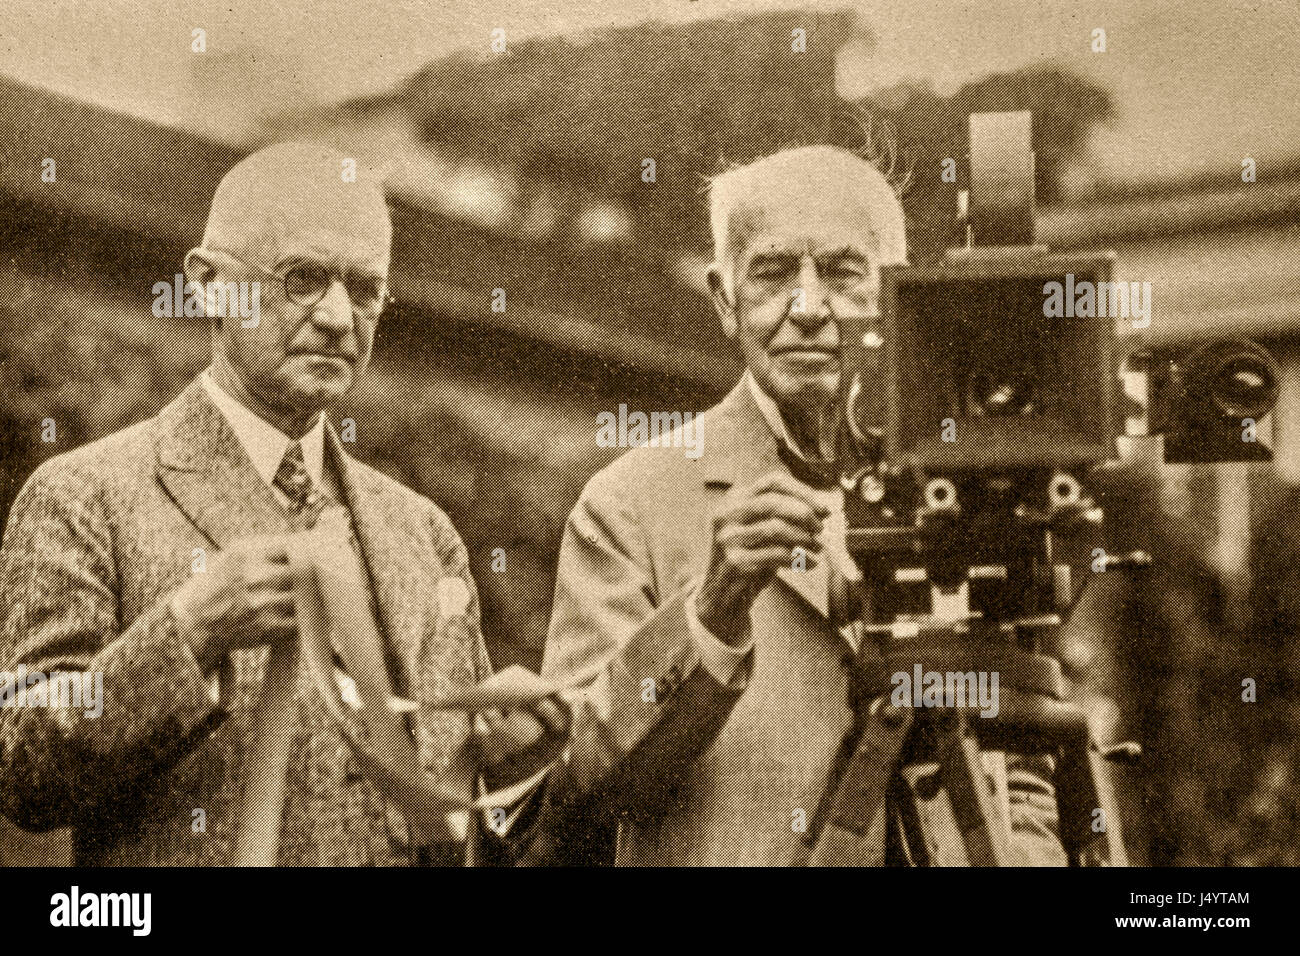 George Eastman, Thomas Alva Edison, alter Jahrgang 1900s Bild Stockfoto